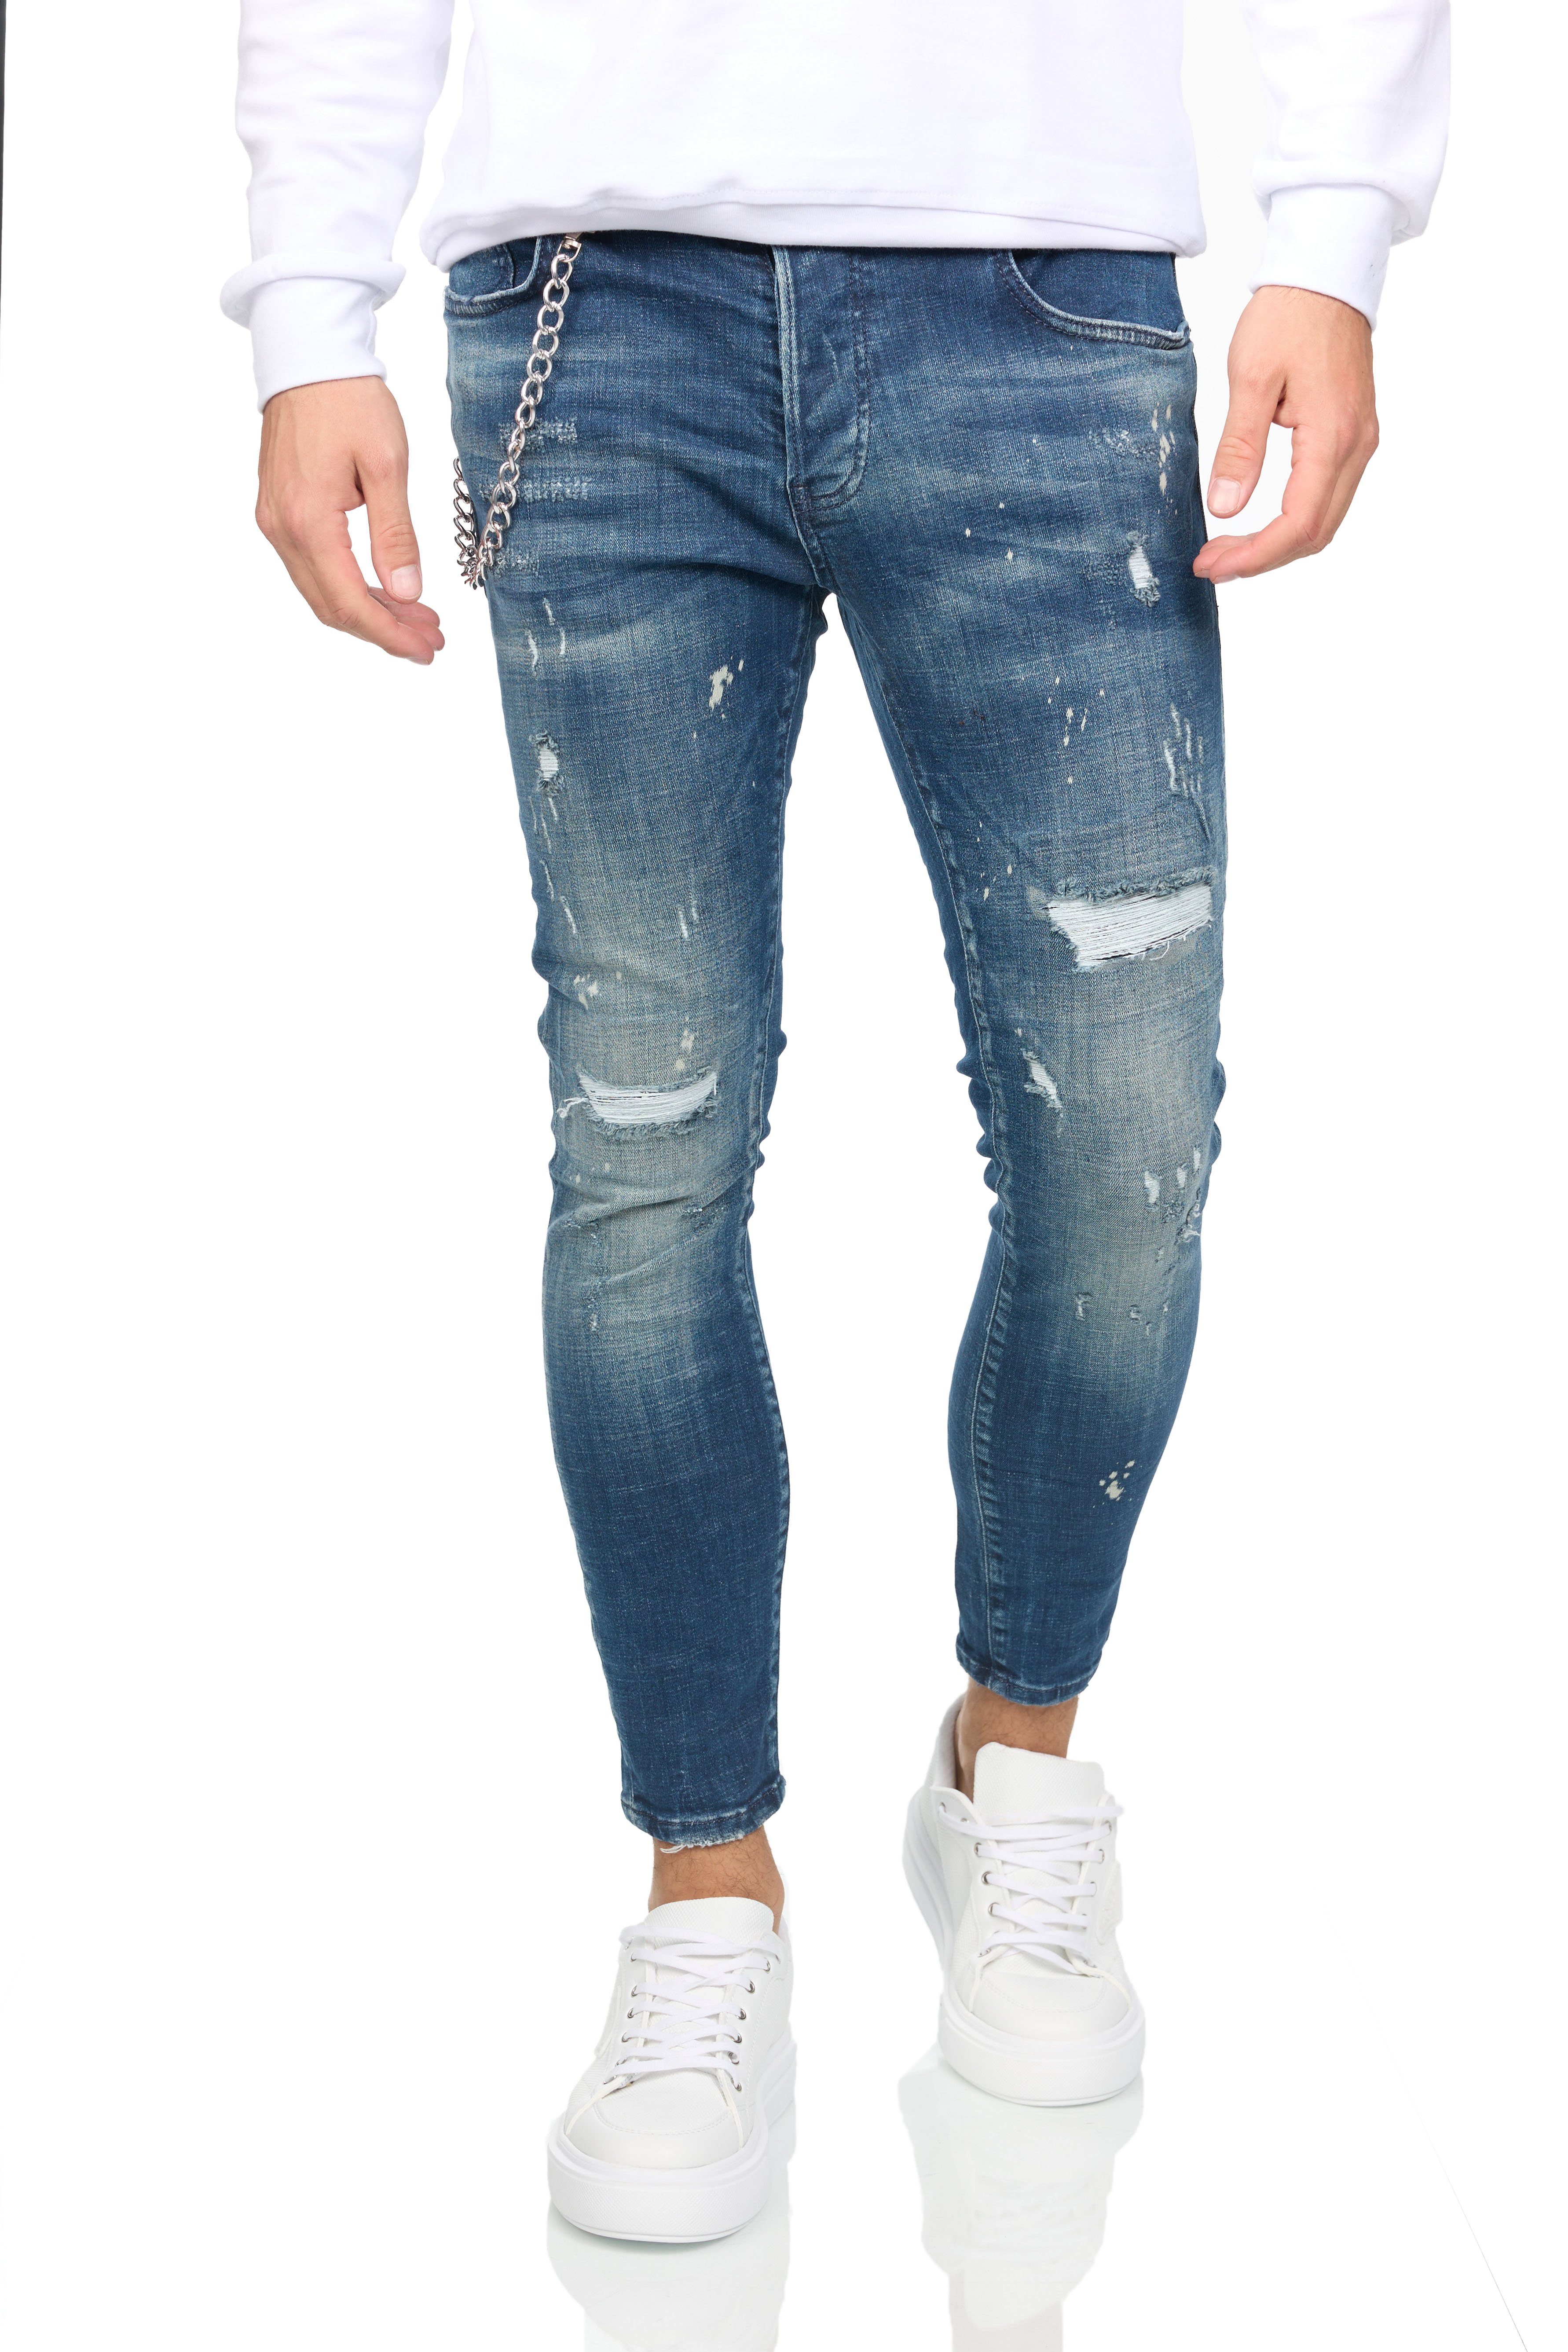 Denim Distriqt Skinny-fit-Jeans Super stretchige Skinny Jeans im Destroyed Look DH-BI 15710